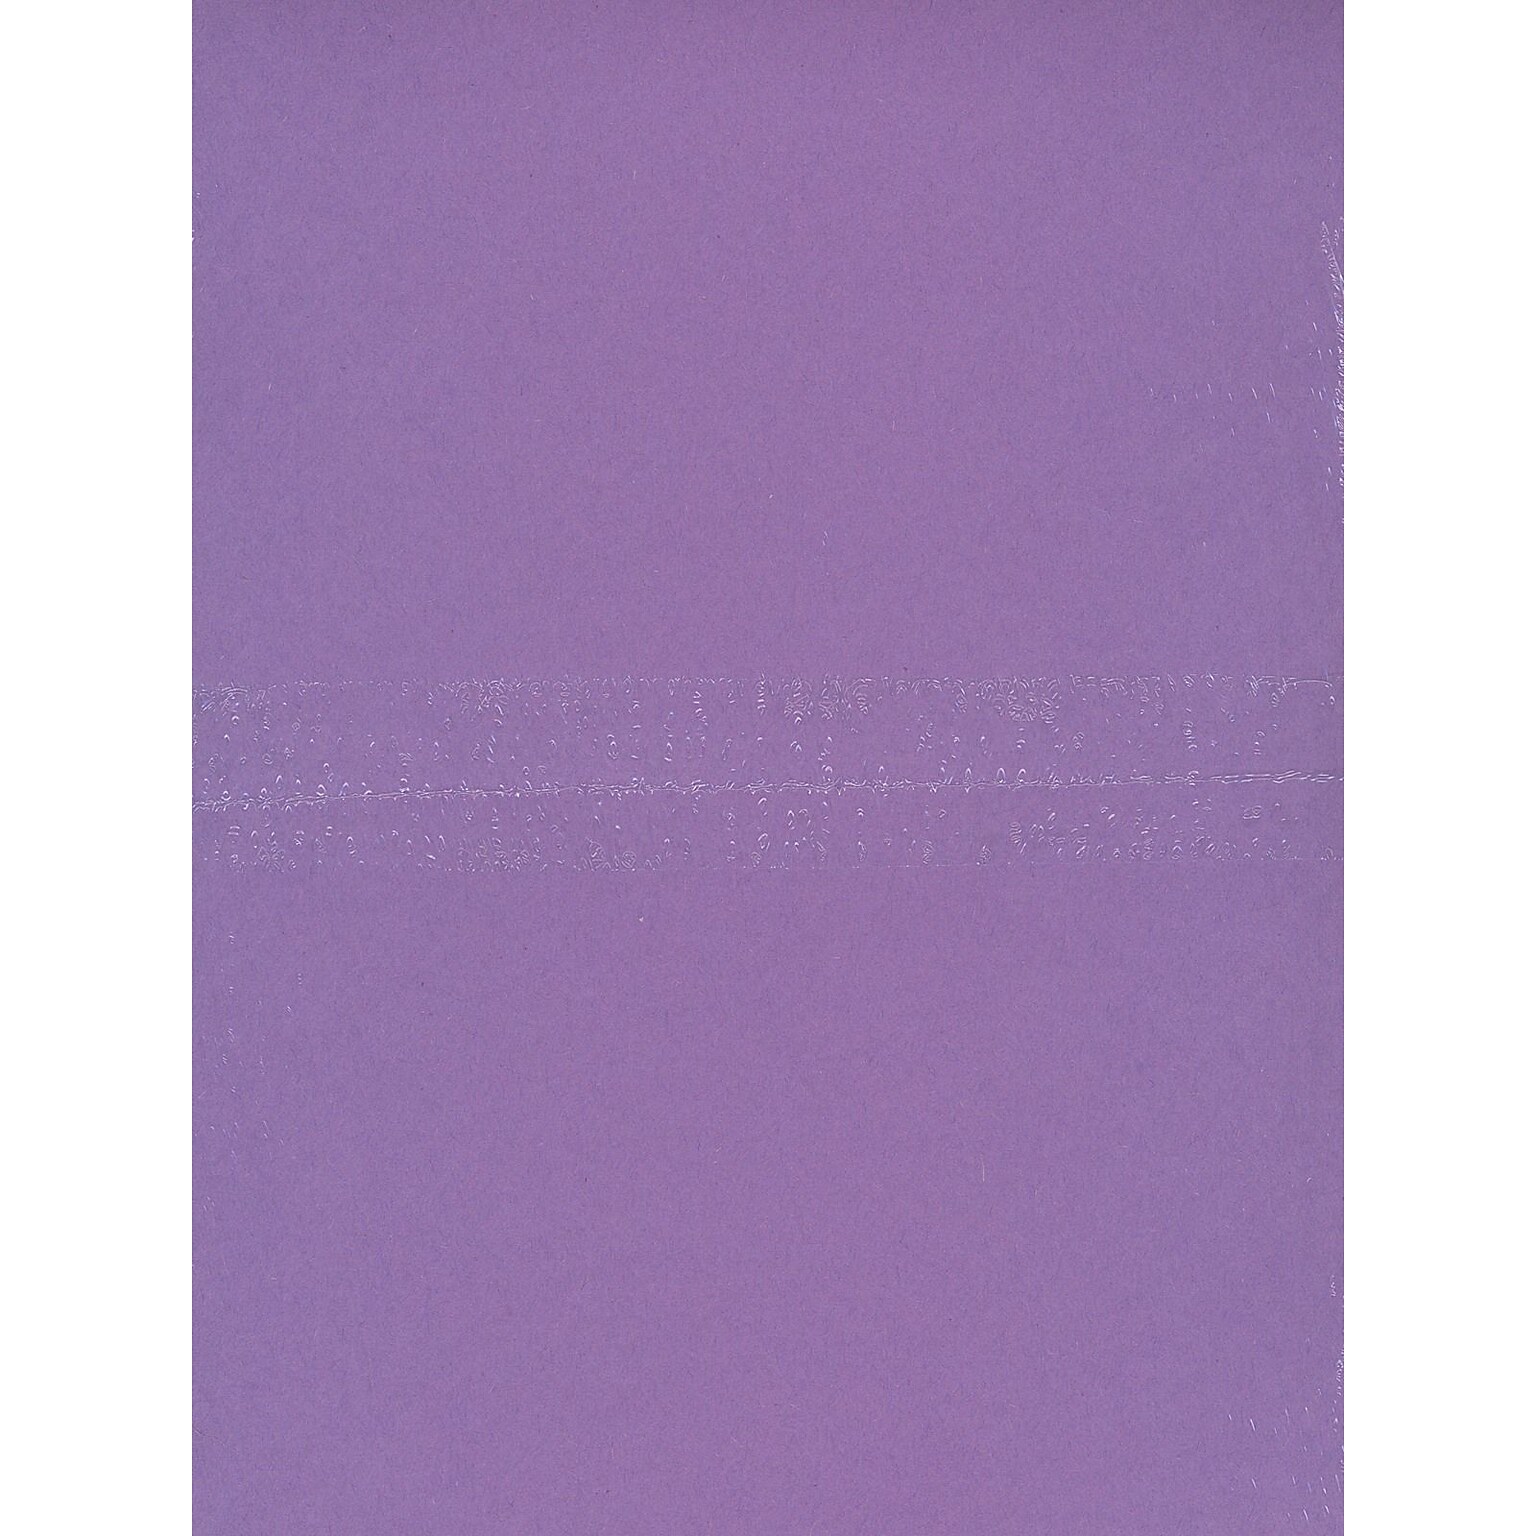 Pacon Sunworks 9 x 12 Construction Paper, Violet, 50 Sheets/Pack, 5/Pack (68831-PK5)